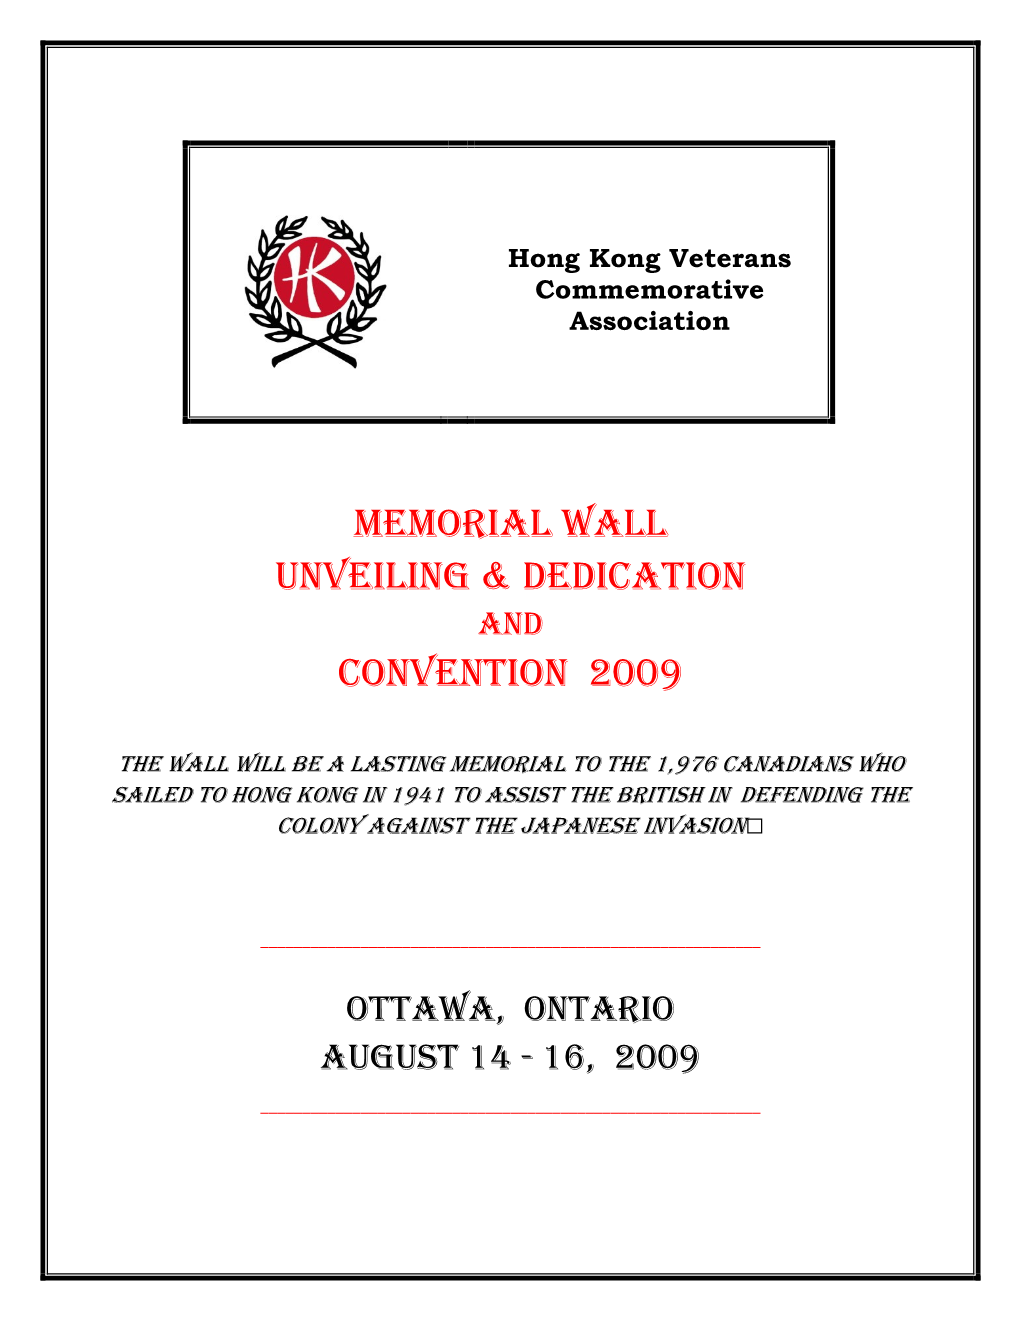 Memorial Wall Unveiling & Dedication Convention 2009